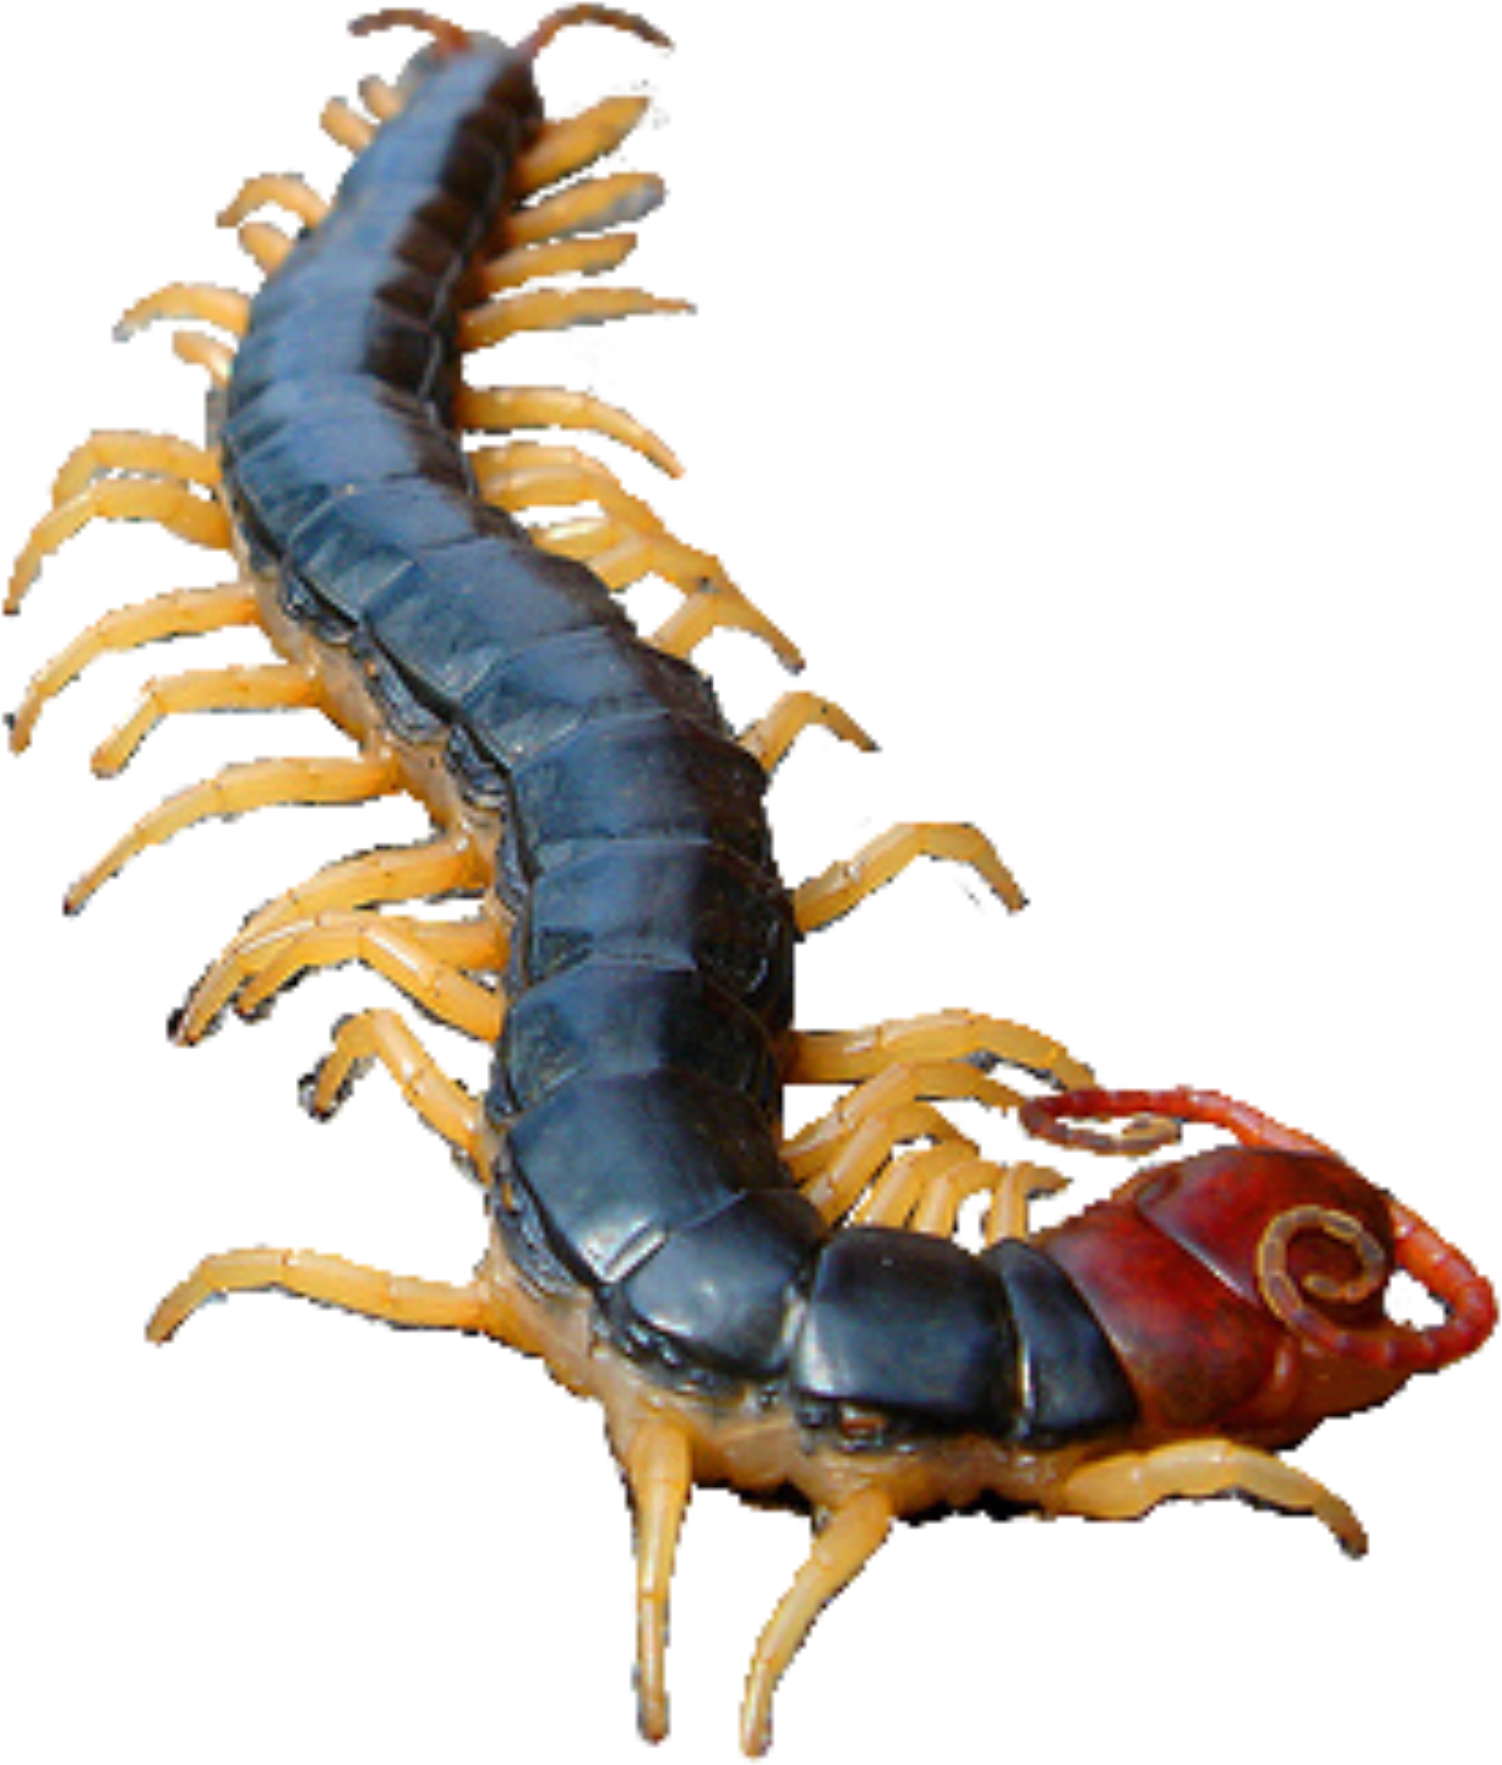 Centipede Close Up